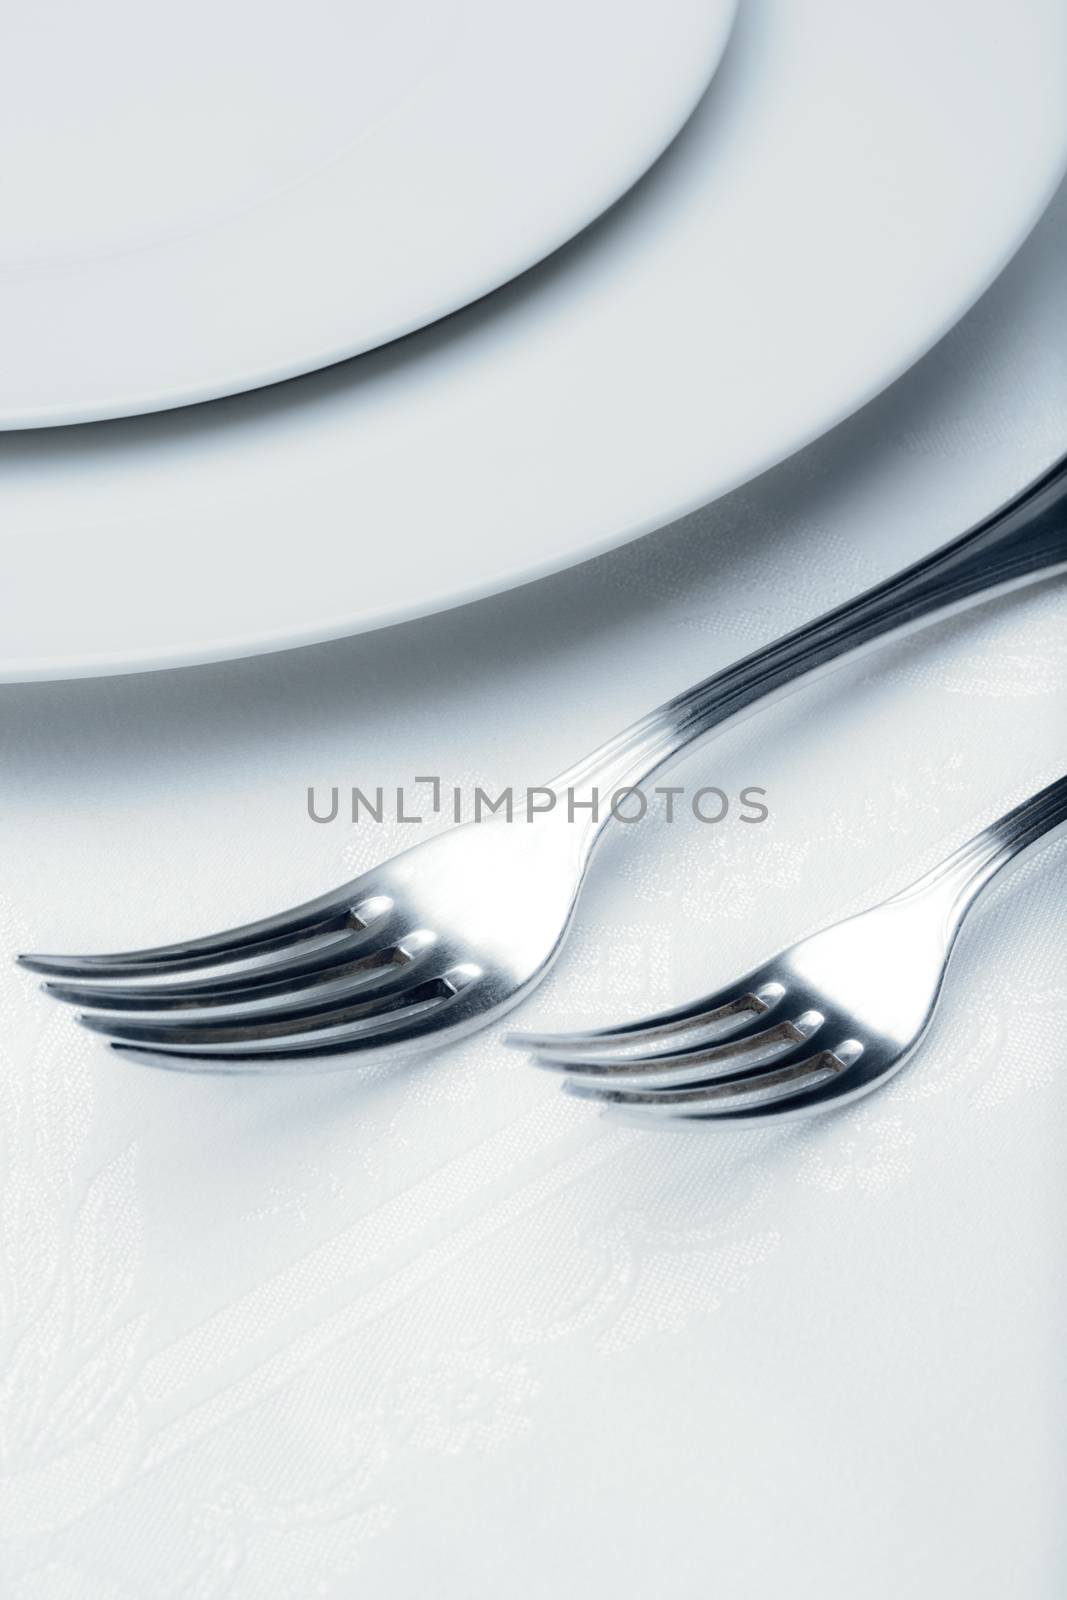 silverware - closeup of forks by courtyardpix